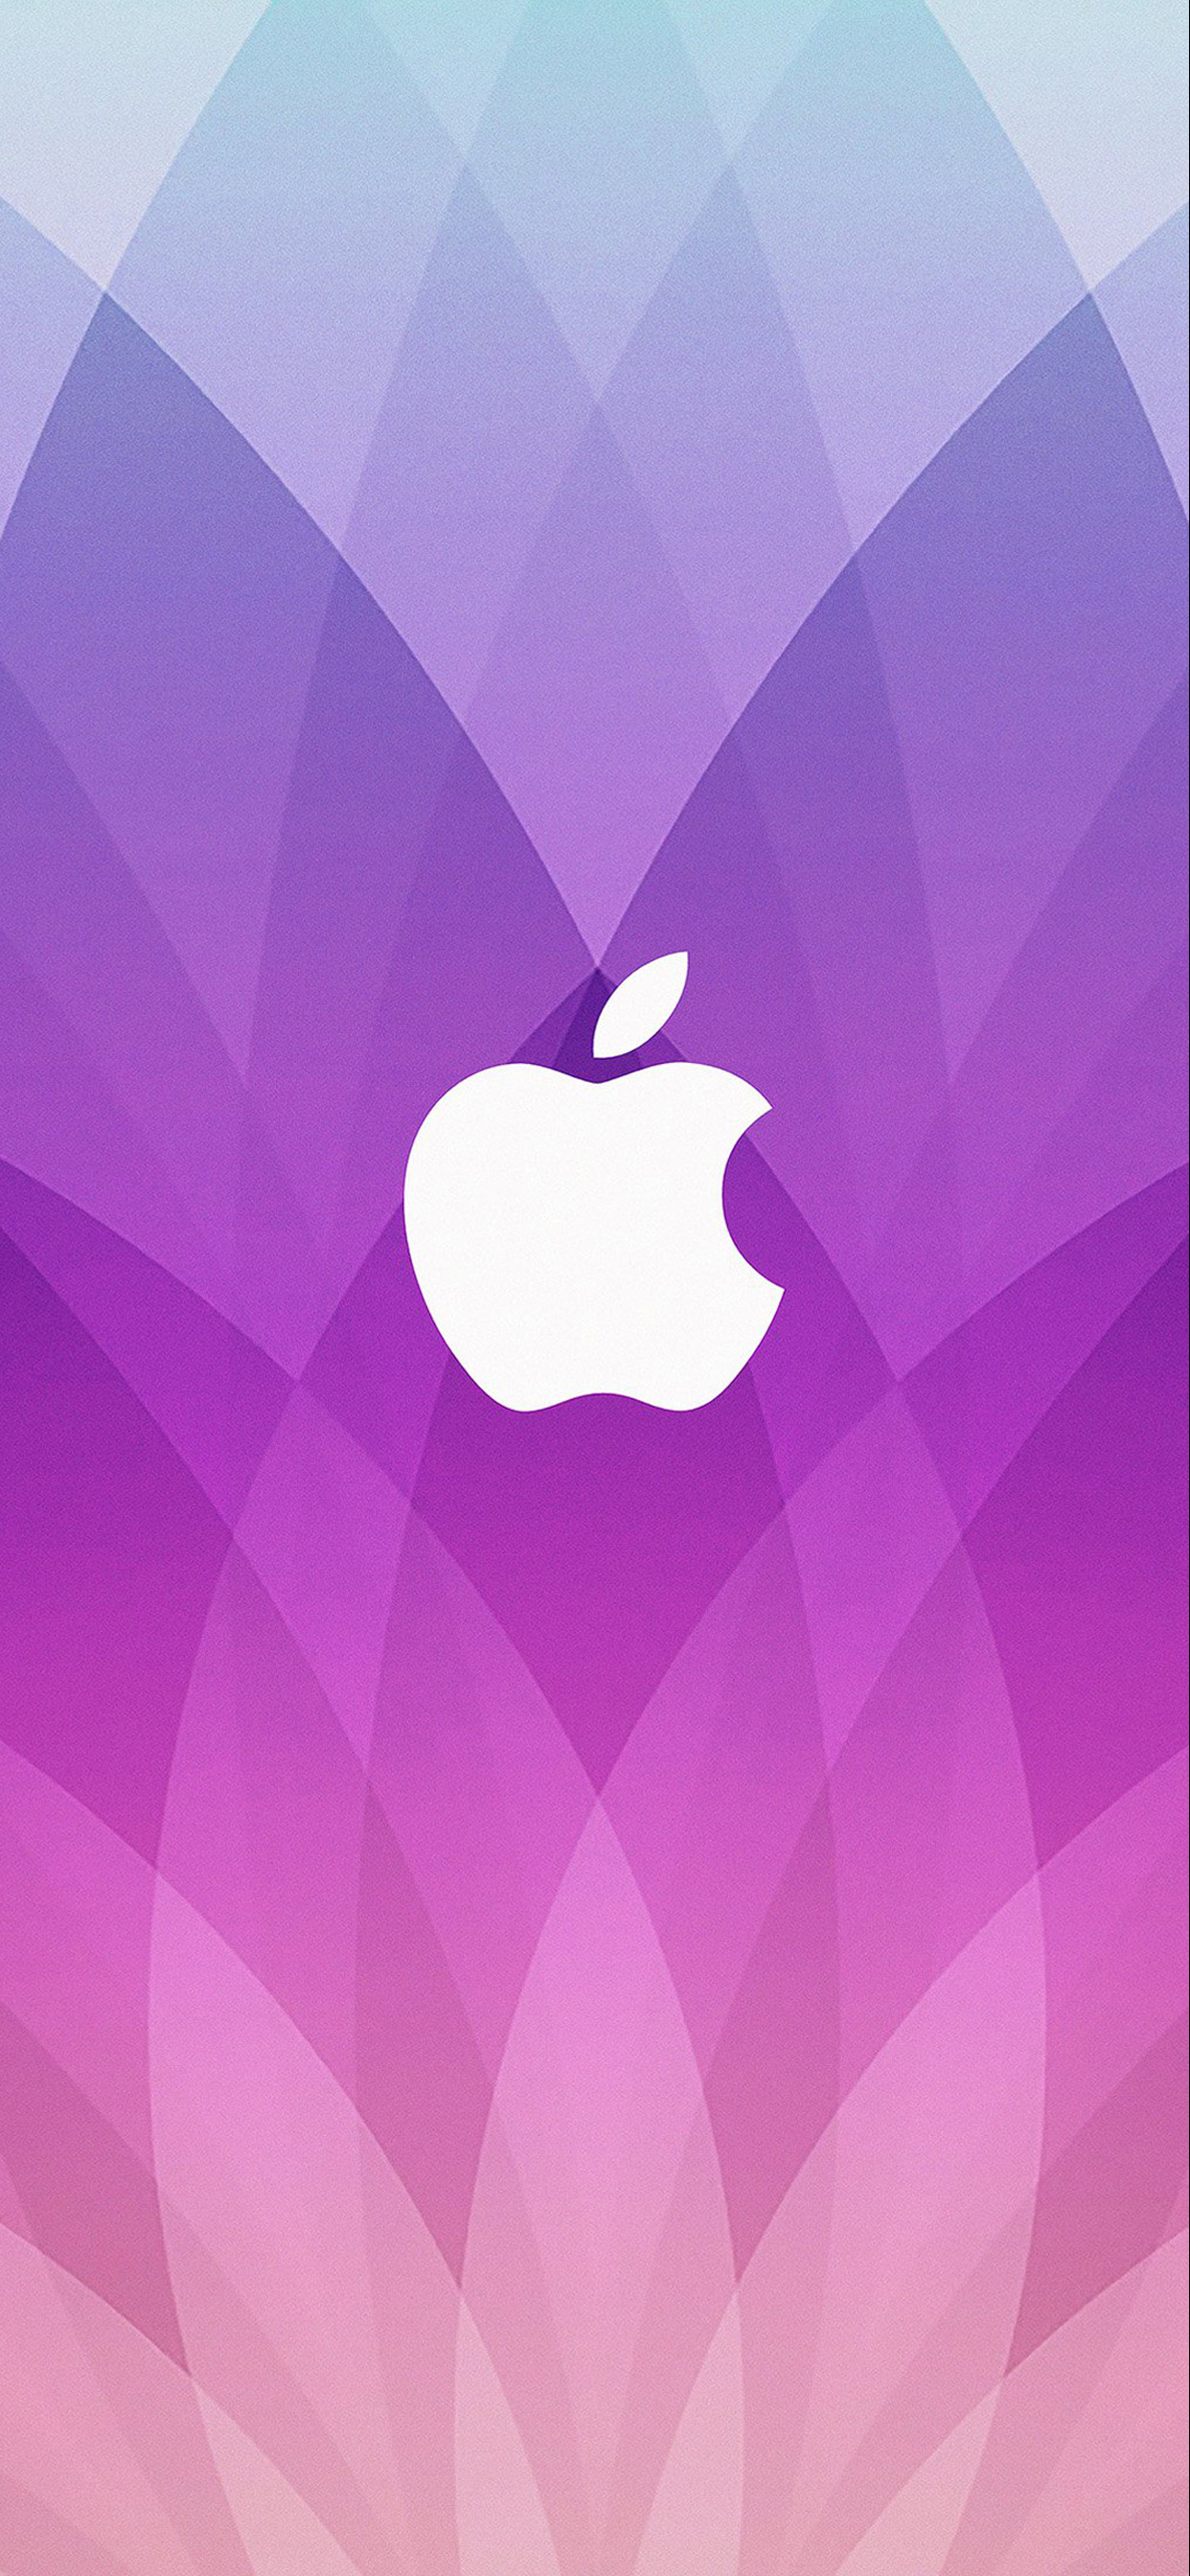 apple logo wallpaper pink